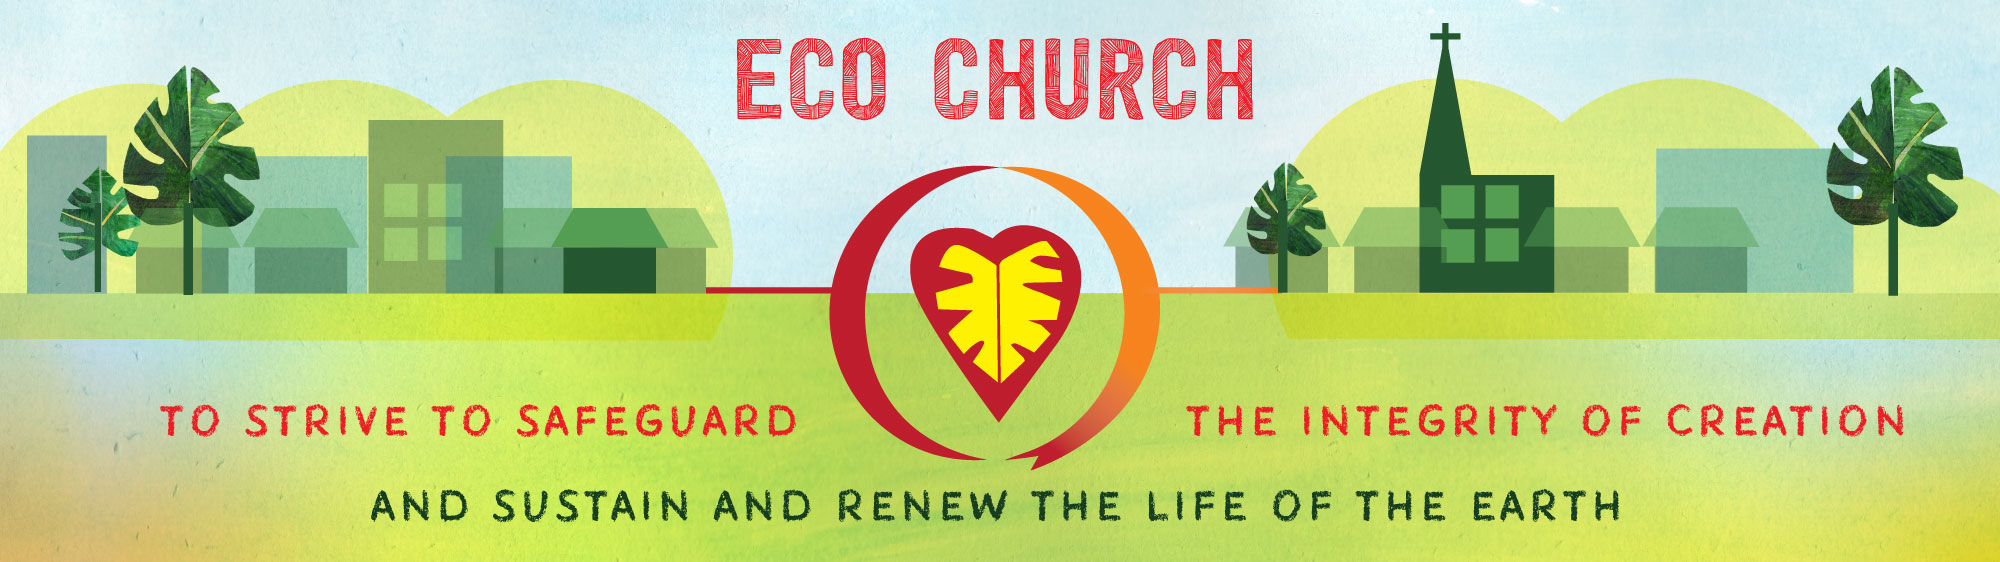 01 Eco Church